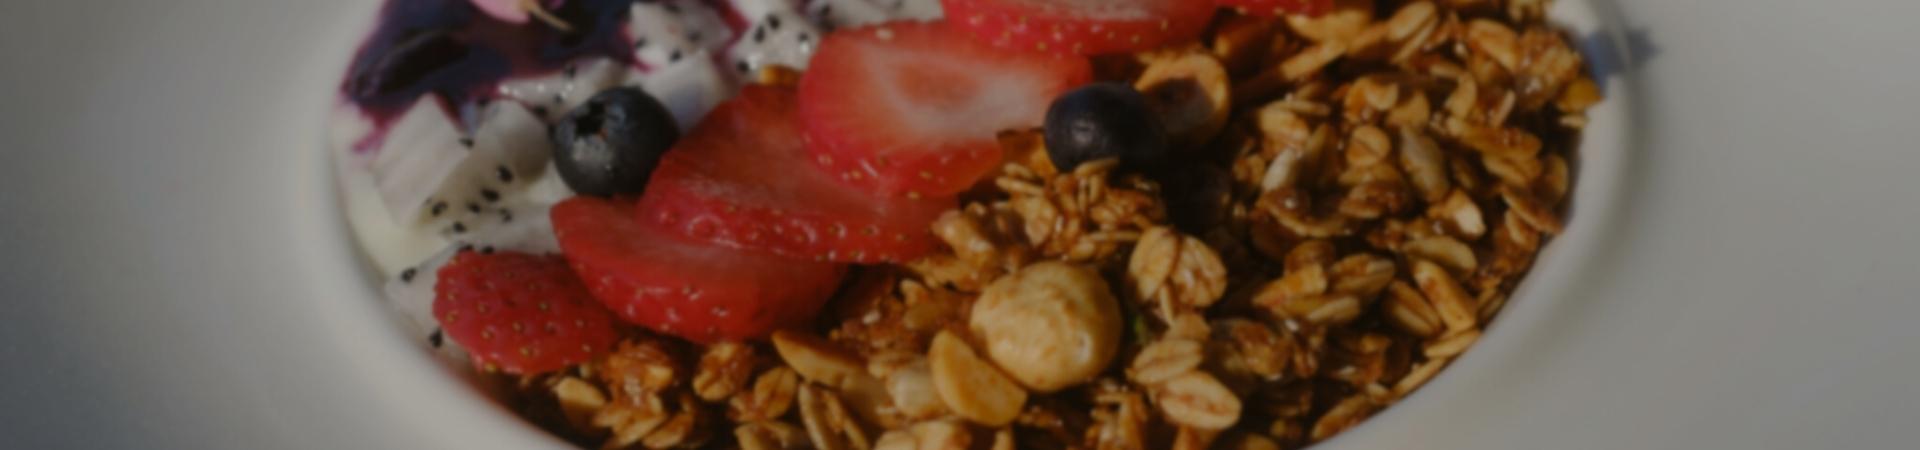 Granola, Muesli & Cereals - The Dempsey Project